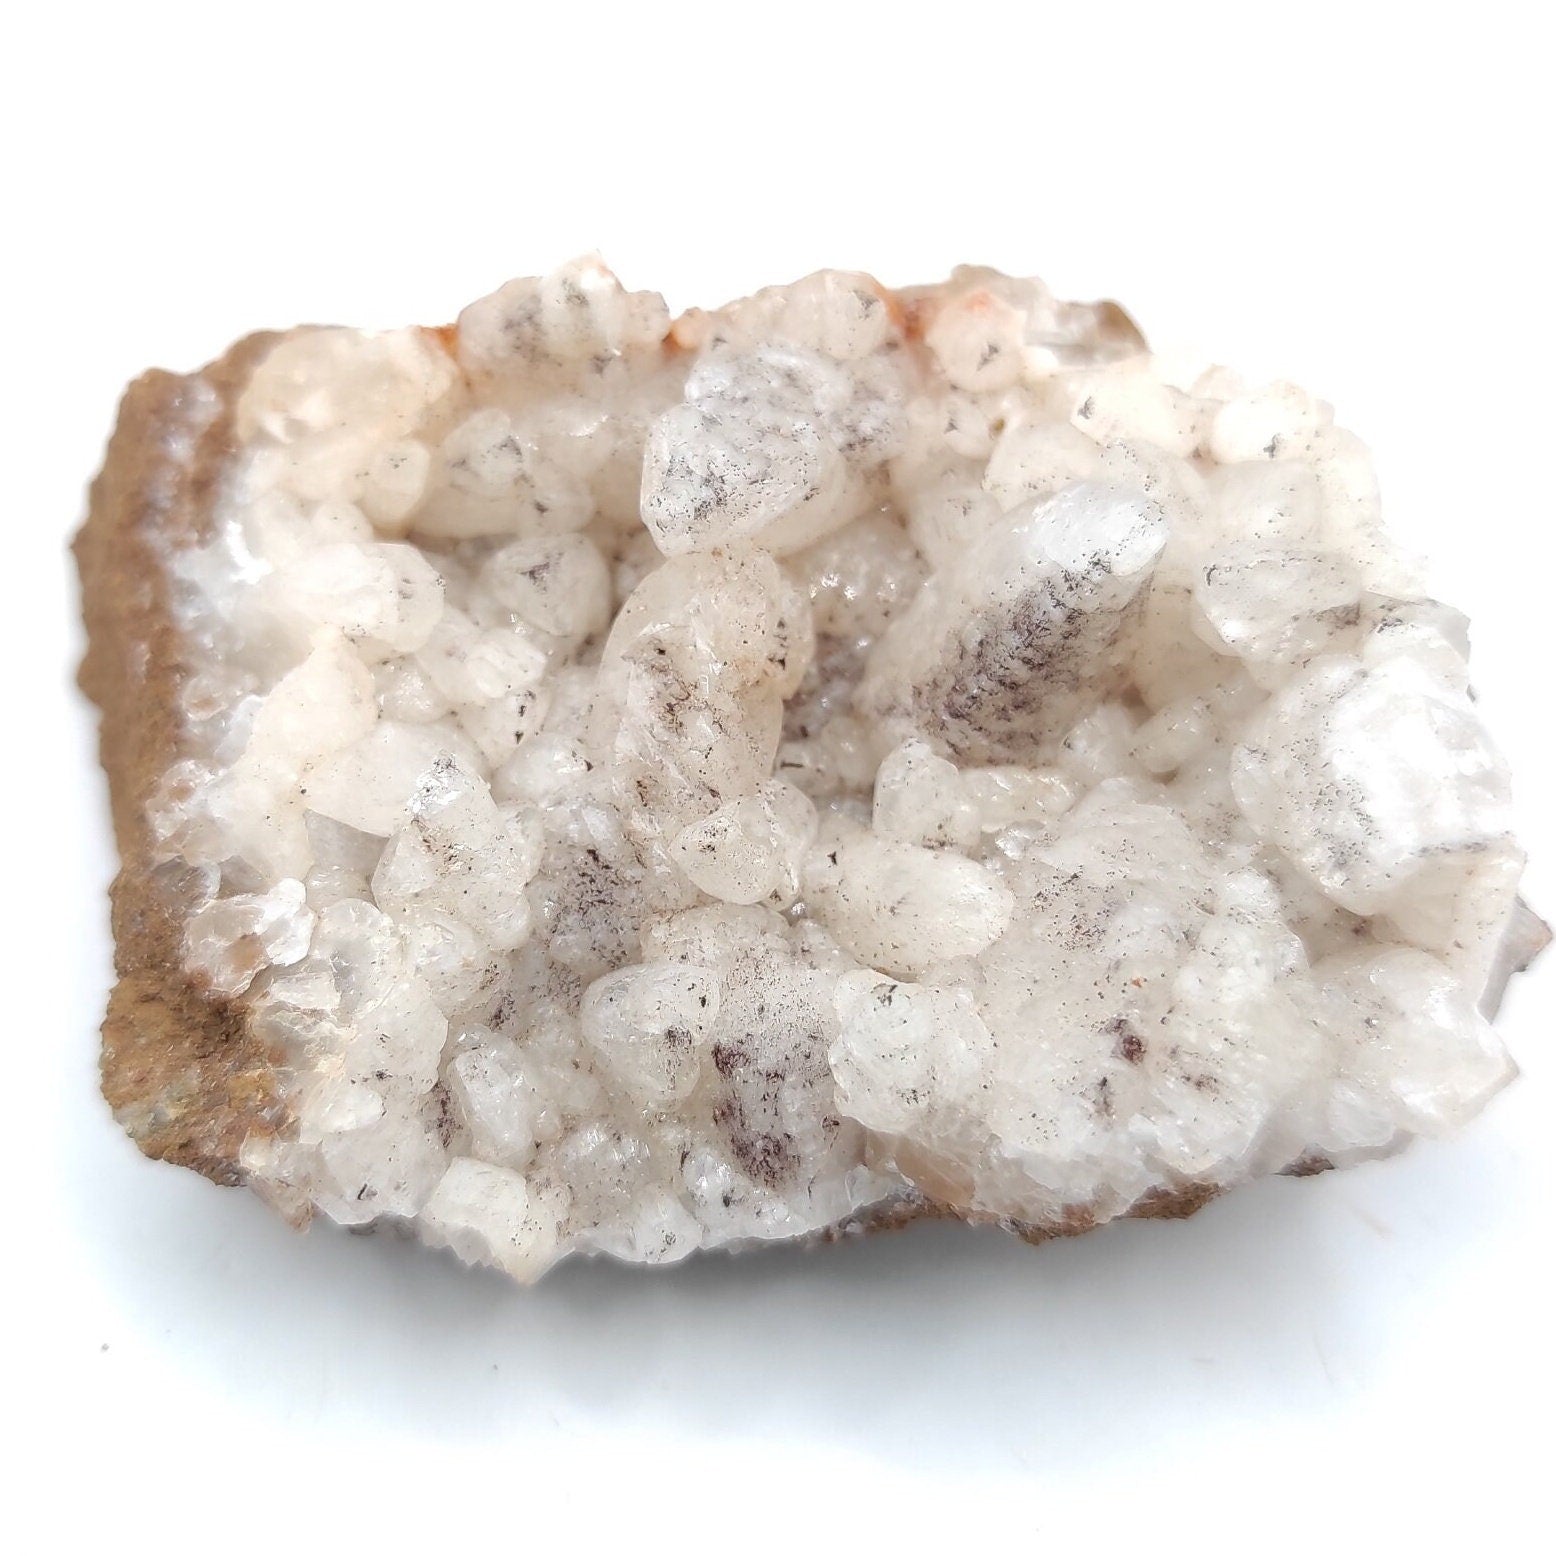 64g UV Reactive Calcite - Phosphorescent Calcite Specimen - Cambridge Cove, Nova Scotia, Canada - UV Minerals - Minerals with Afterglow